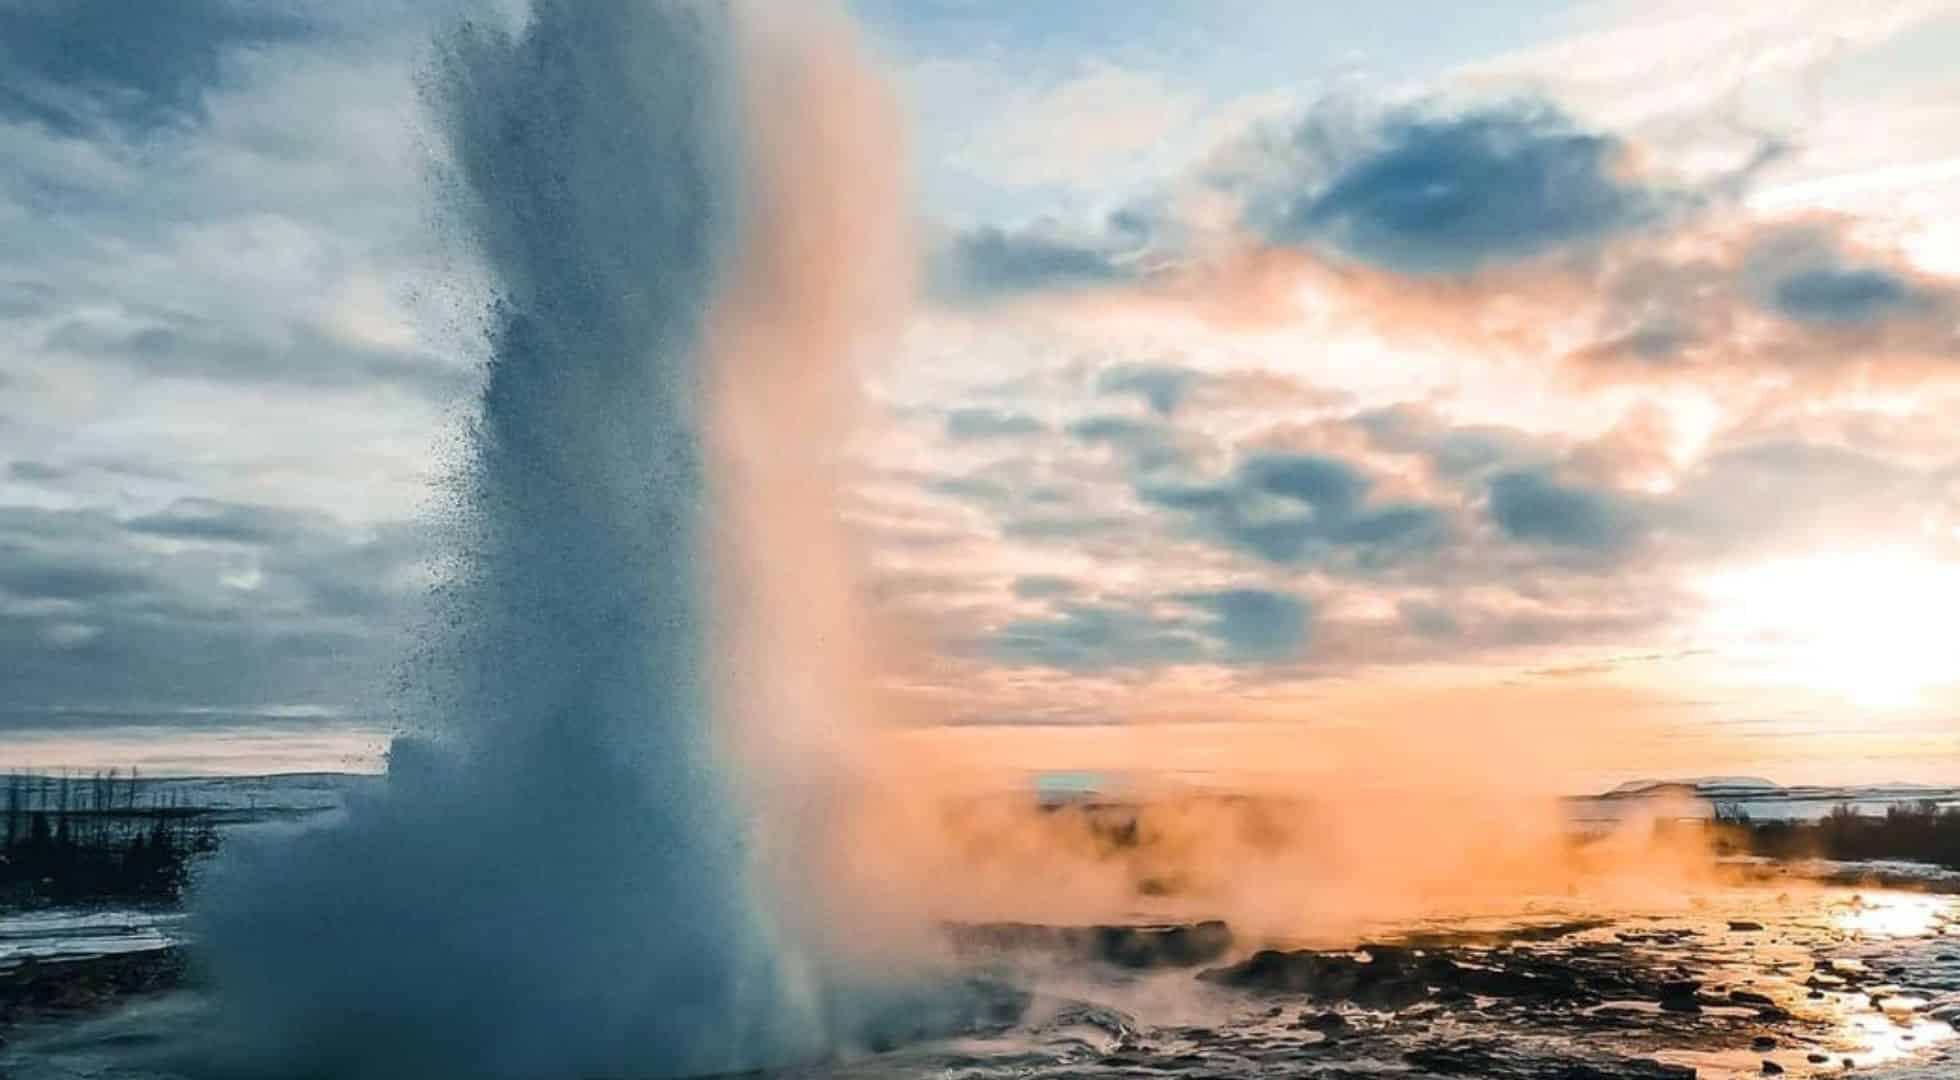 Iceland's amazing natural wonders